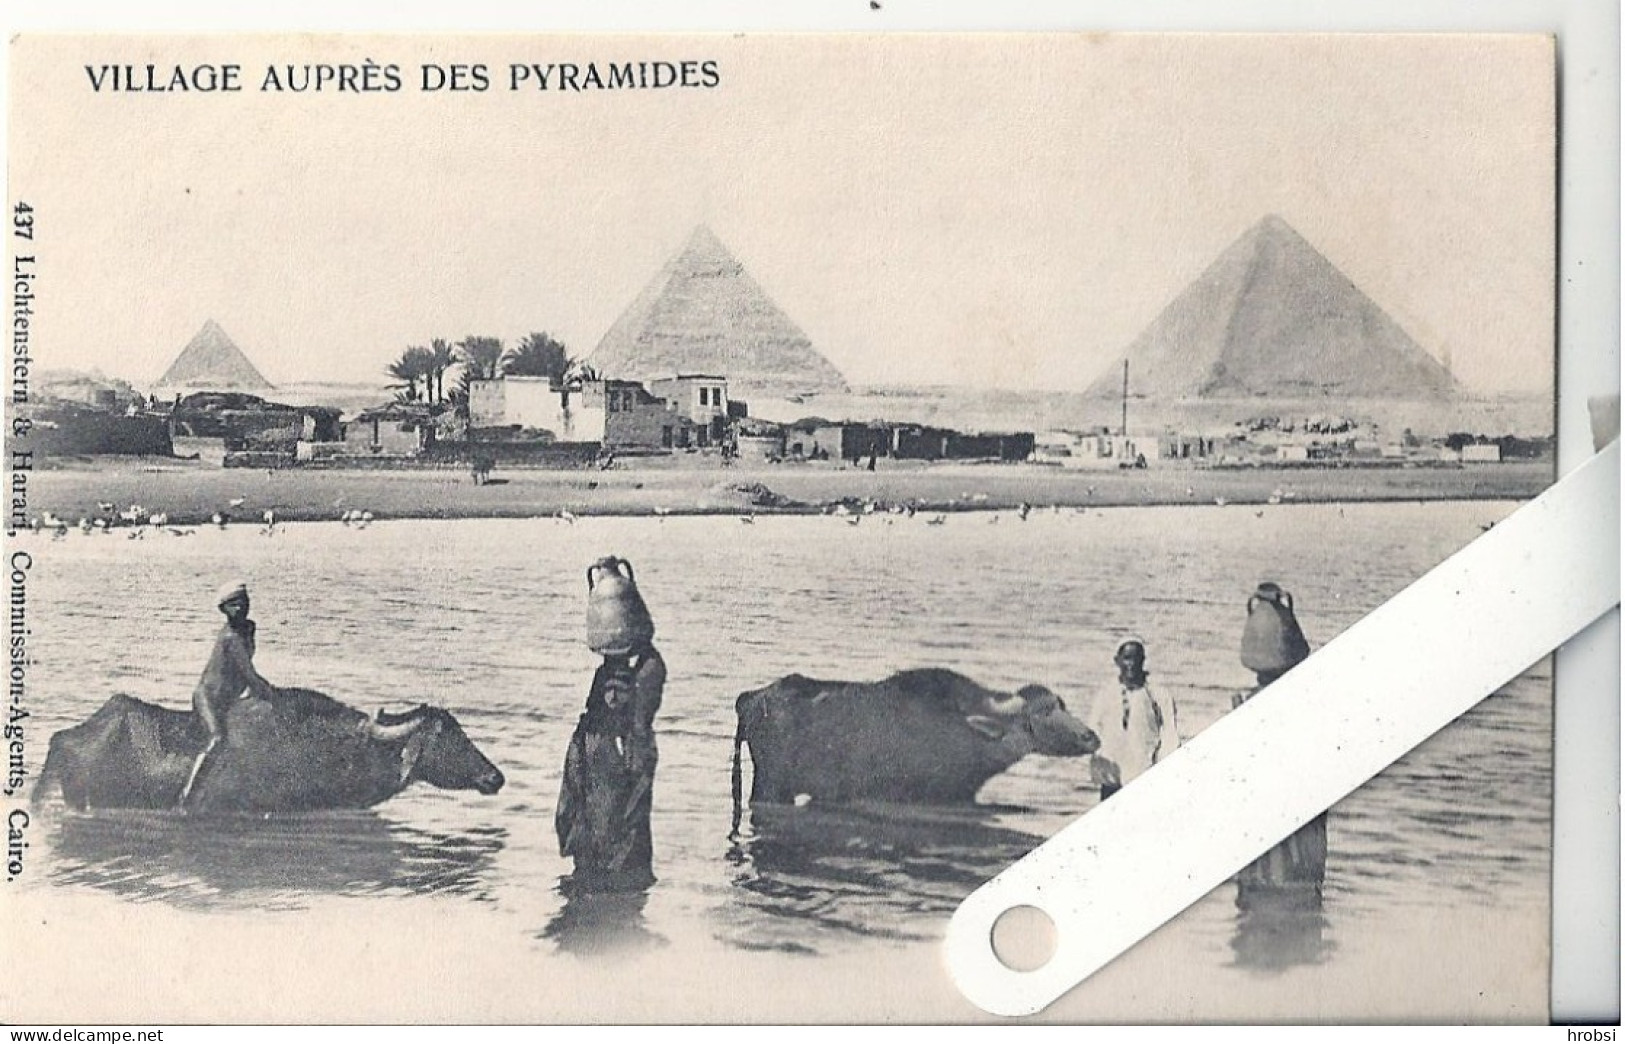 Egypte Village Auprès Des Pyramides Pyramides, Ed Lichtenstern & Harari 437, Animation - Pyramides